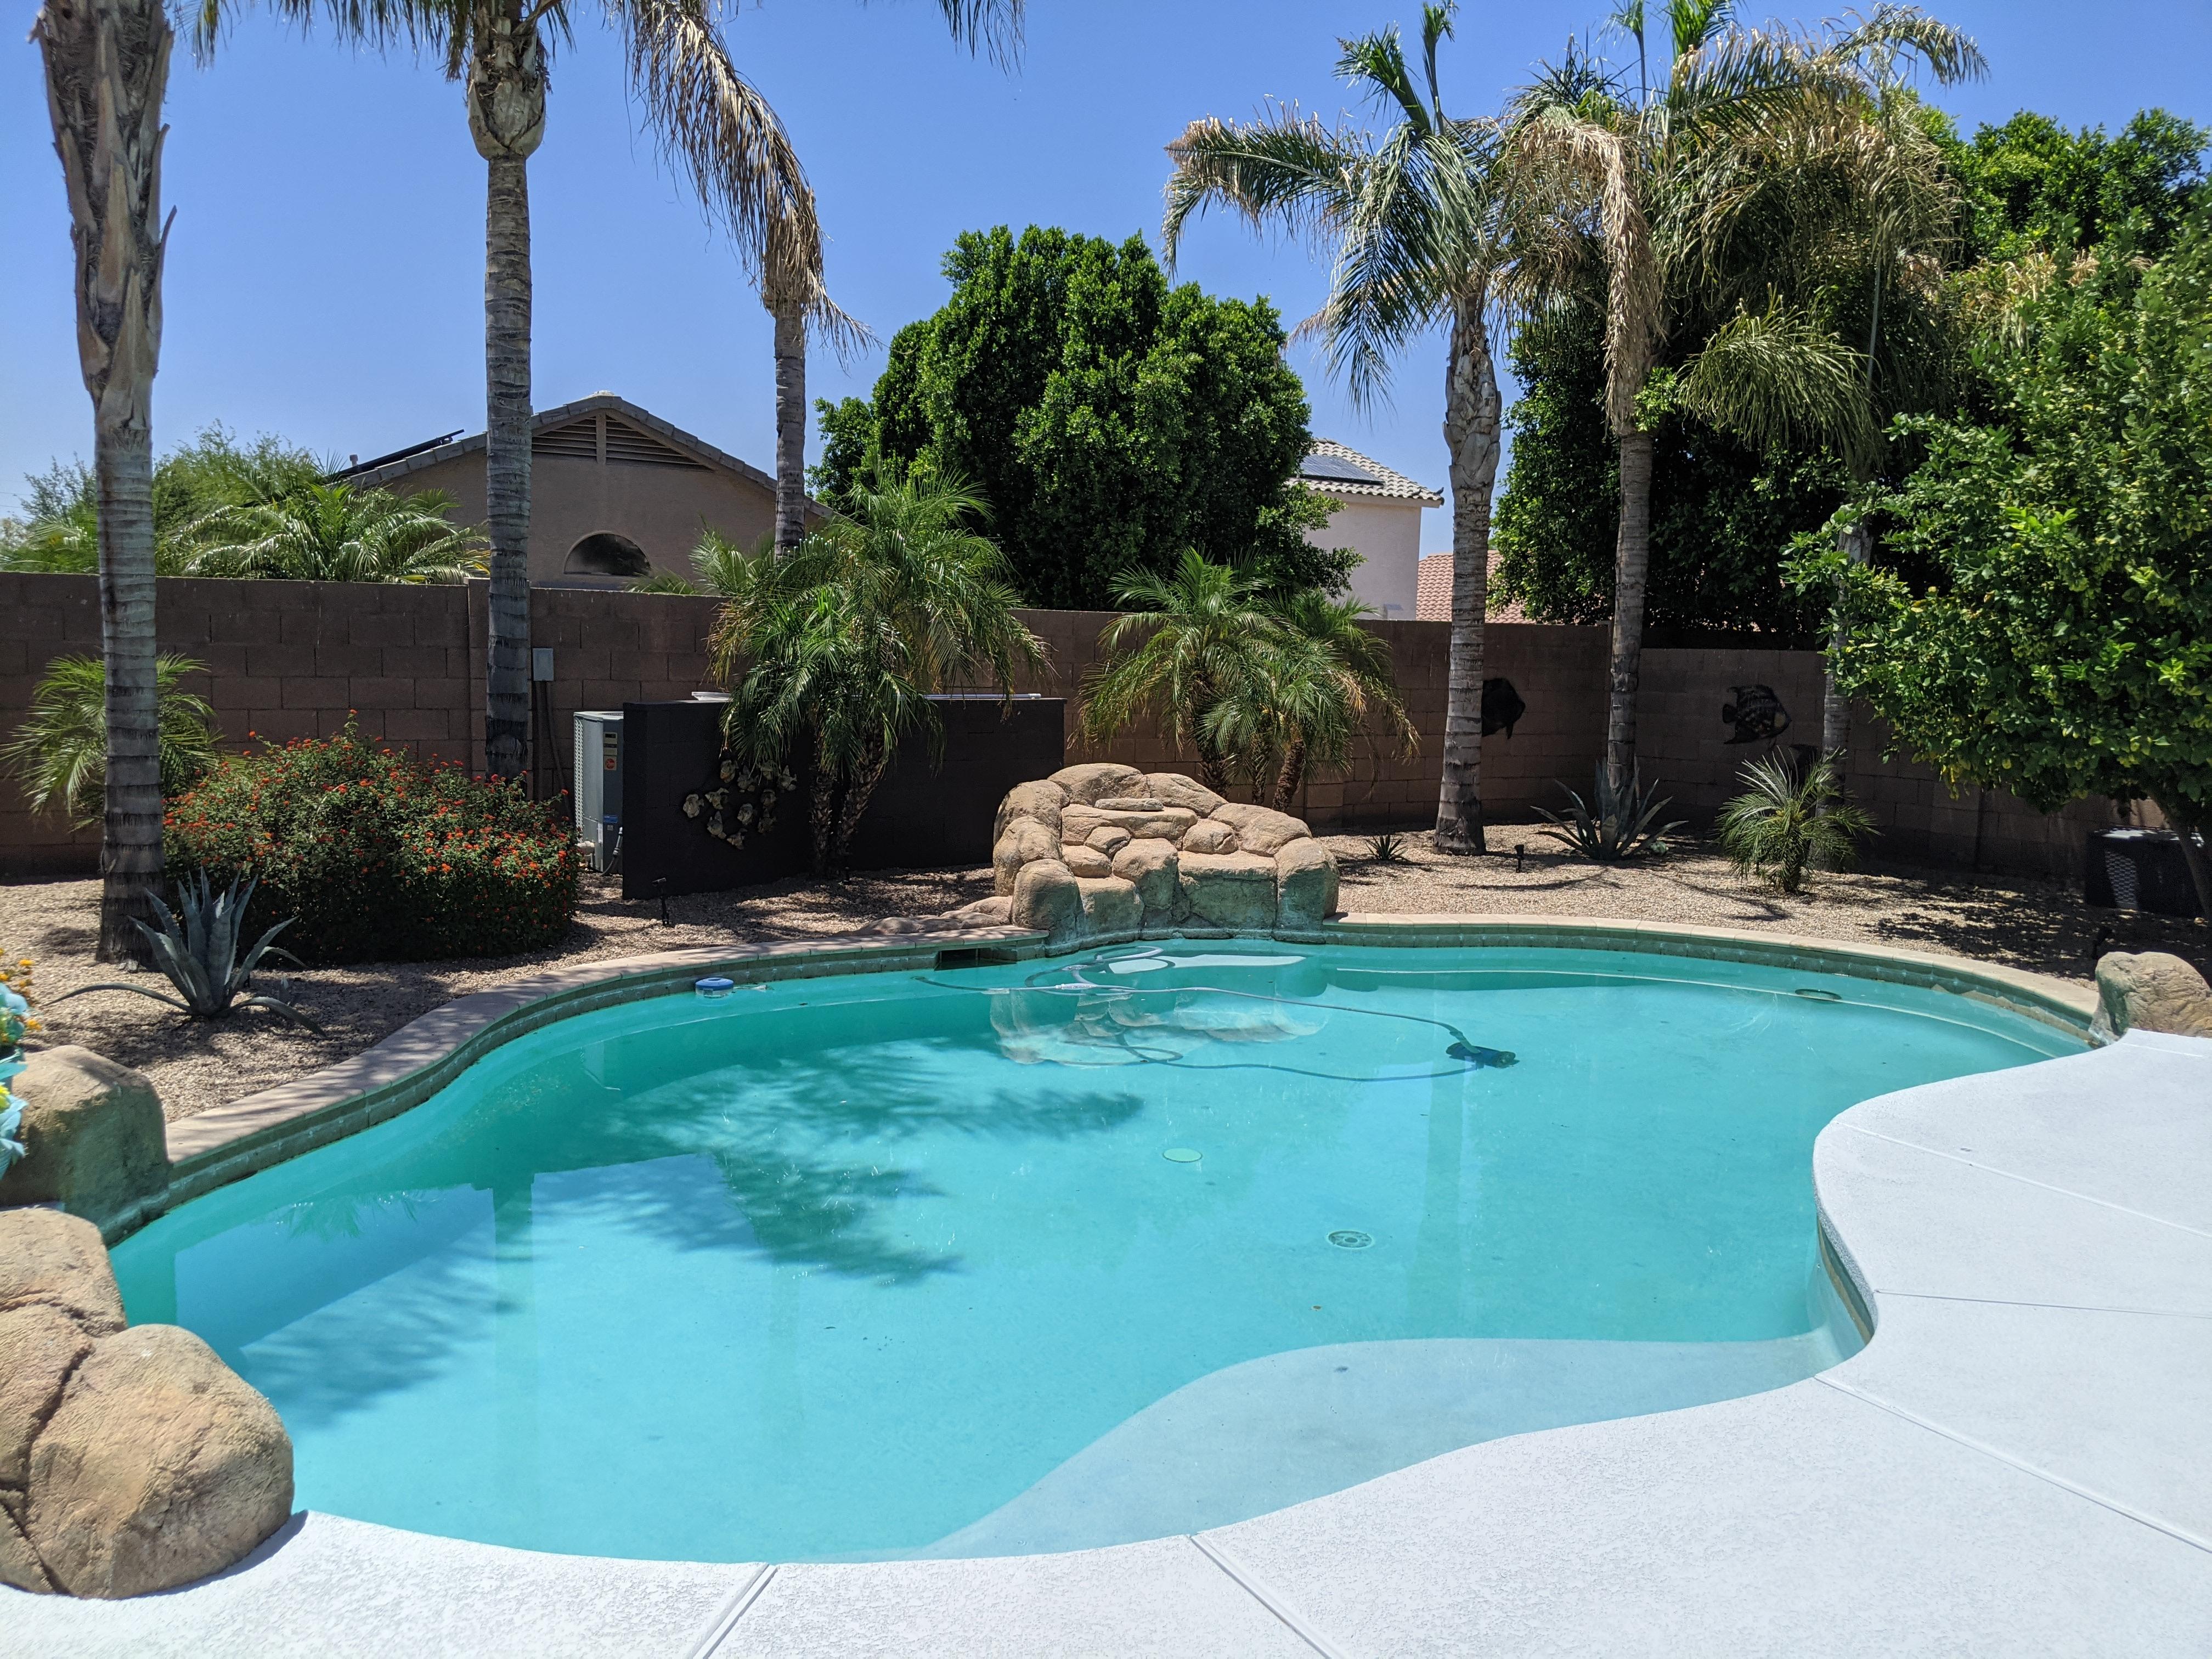 Pool and yard at a home in Goodyear Arizona